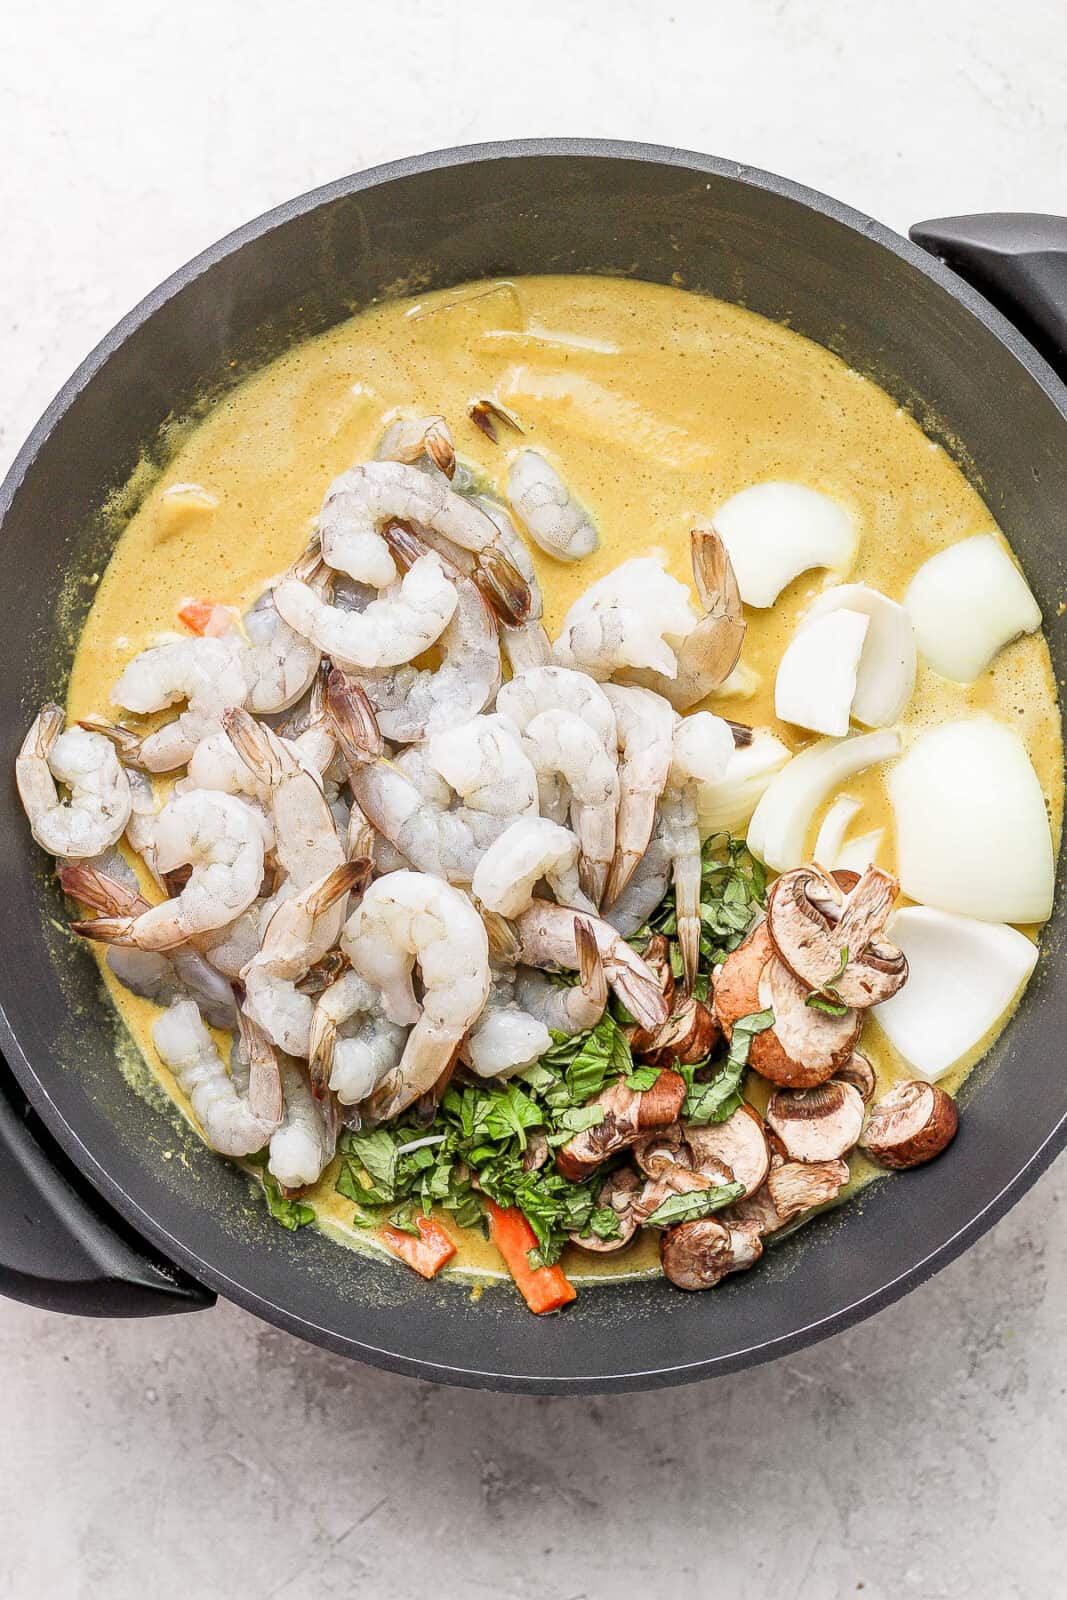 Shrimp, basil, mushrooms and onion added to the wok.